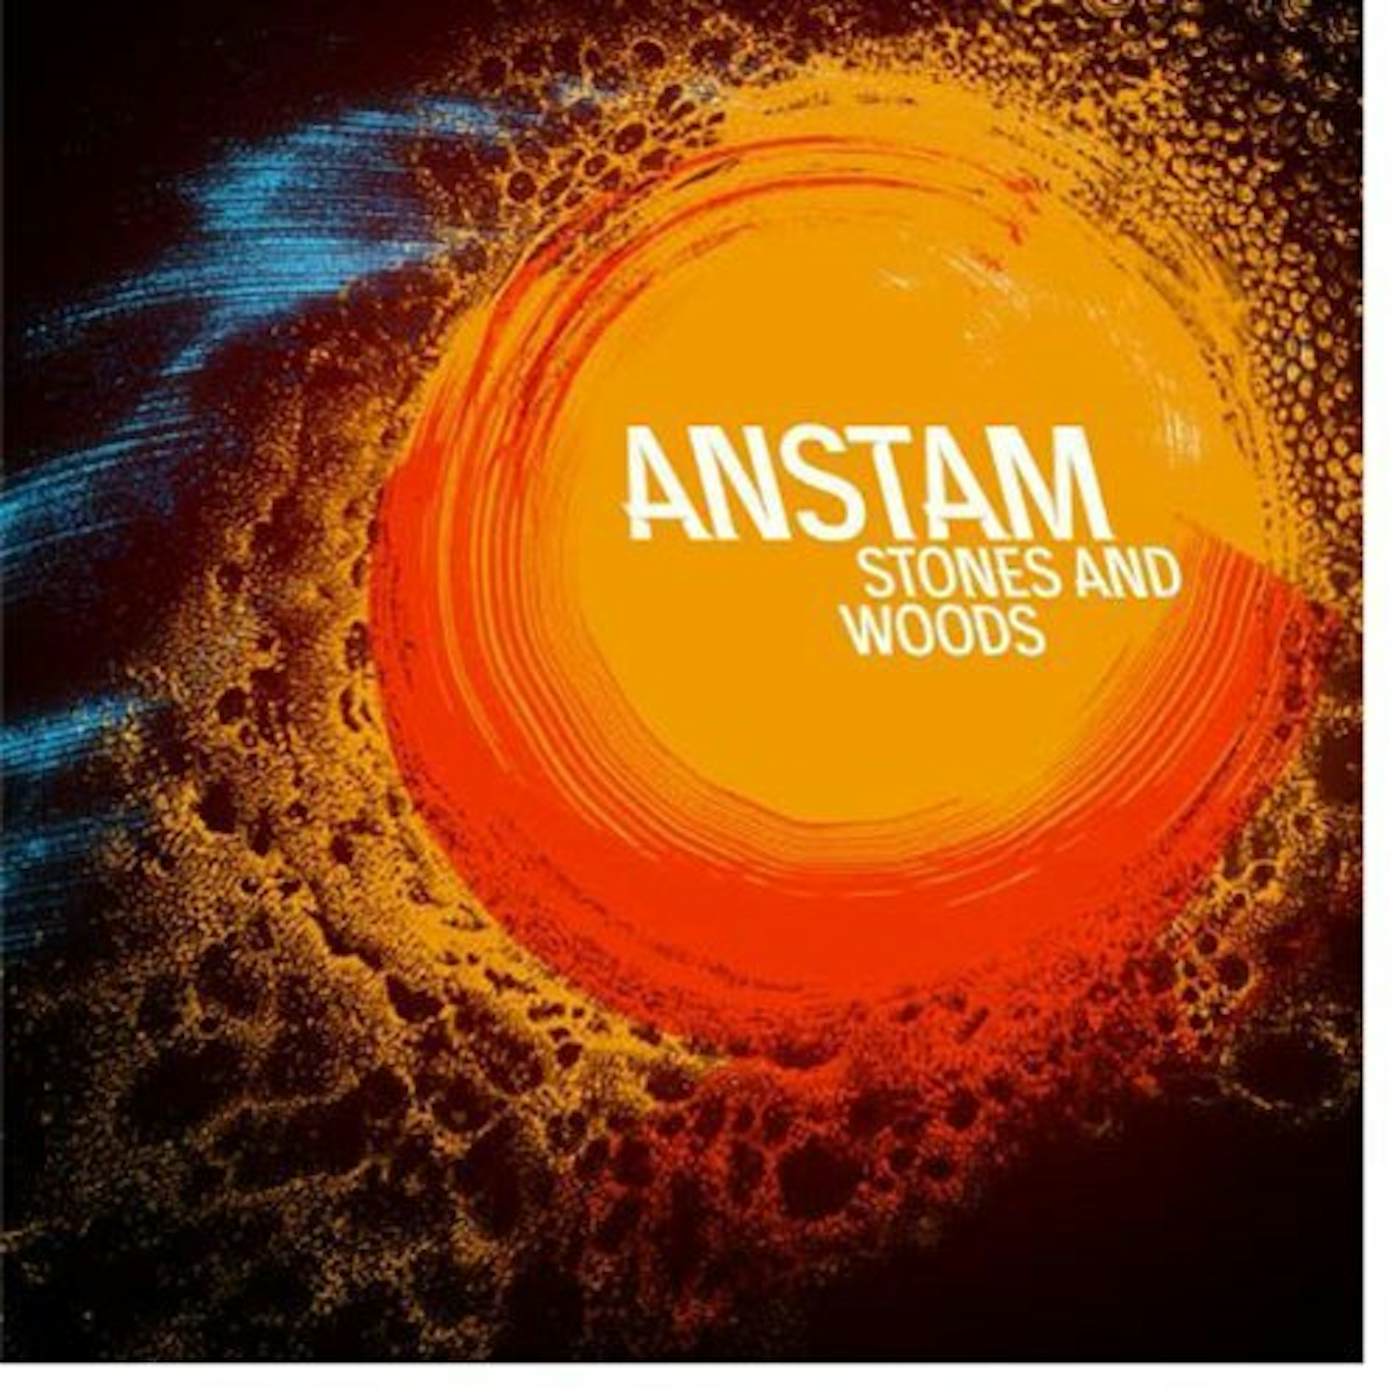 Anstam STONES & WOODS CD